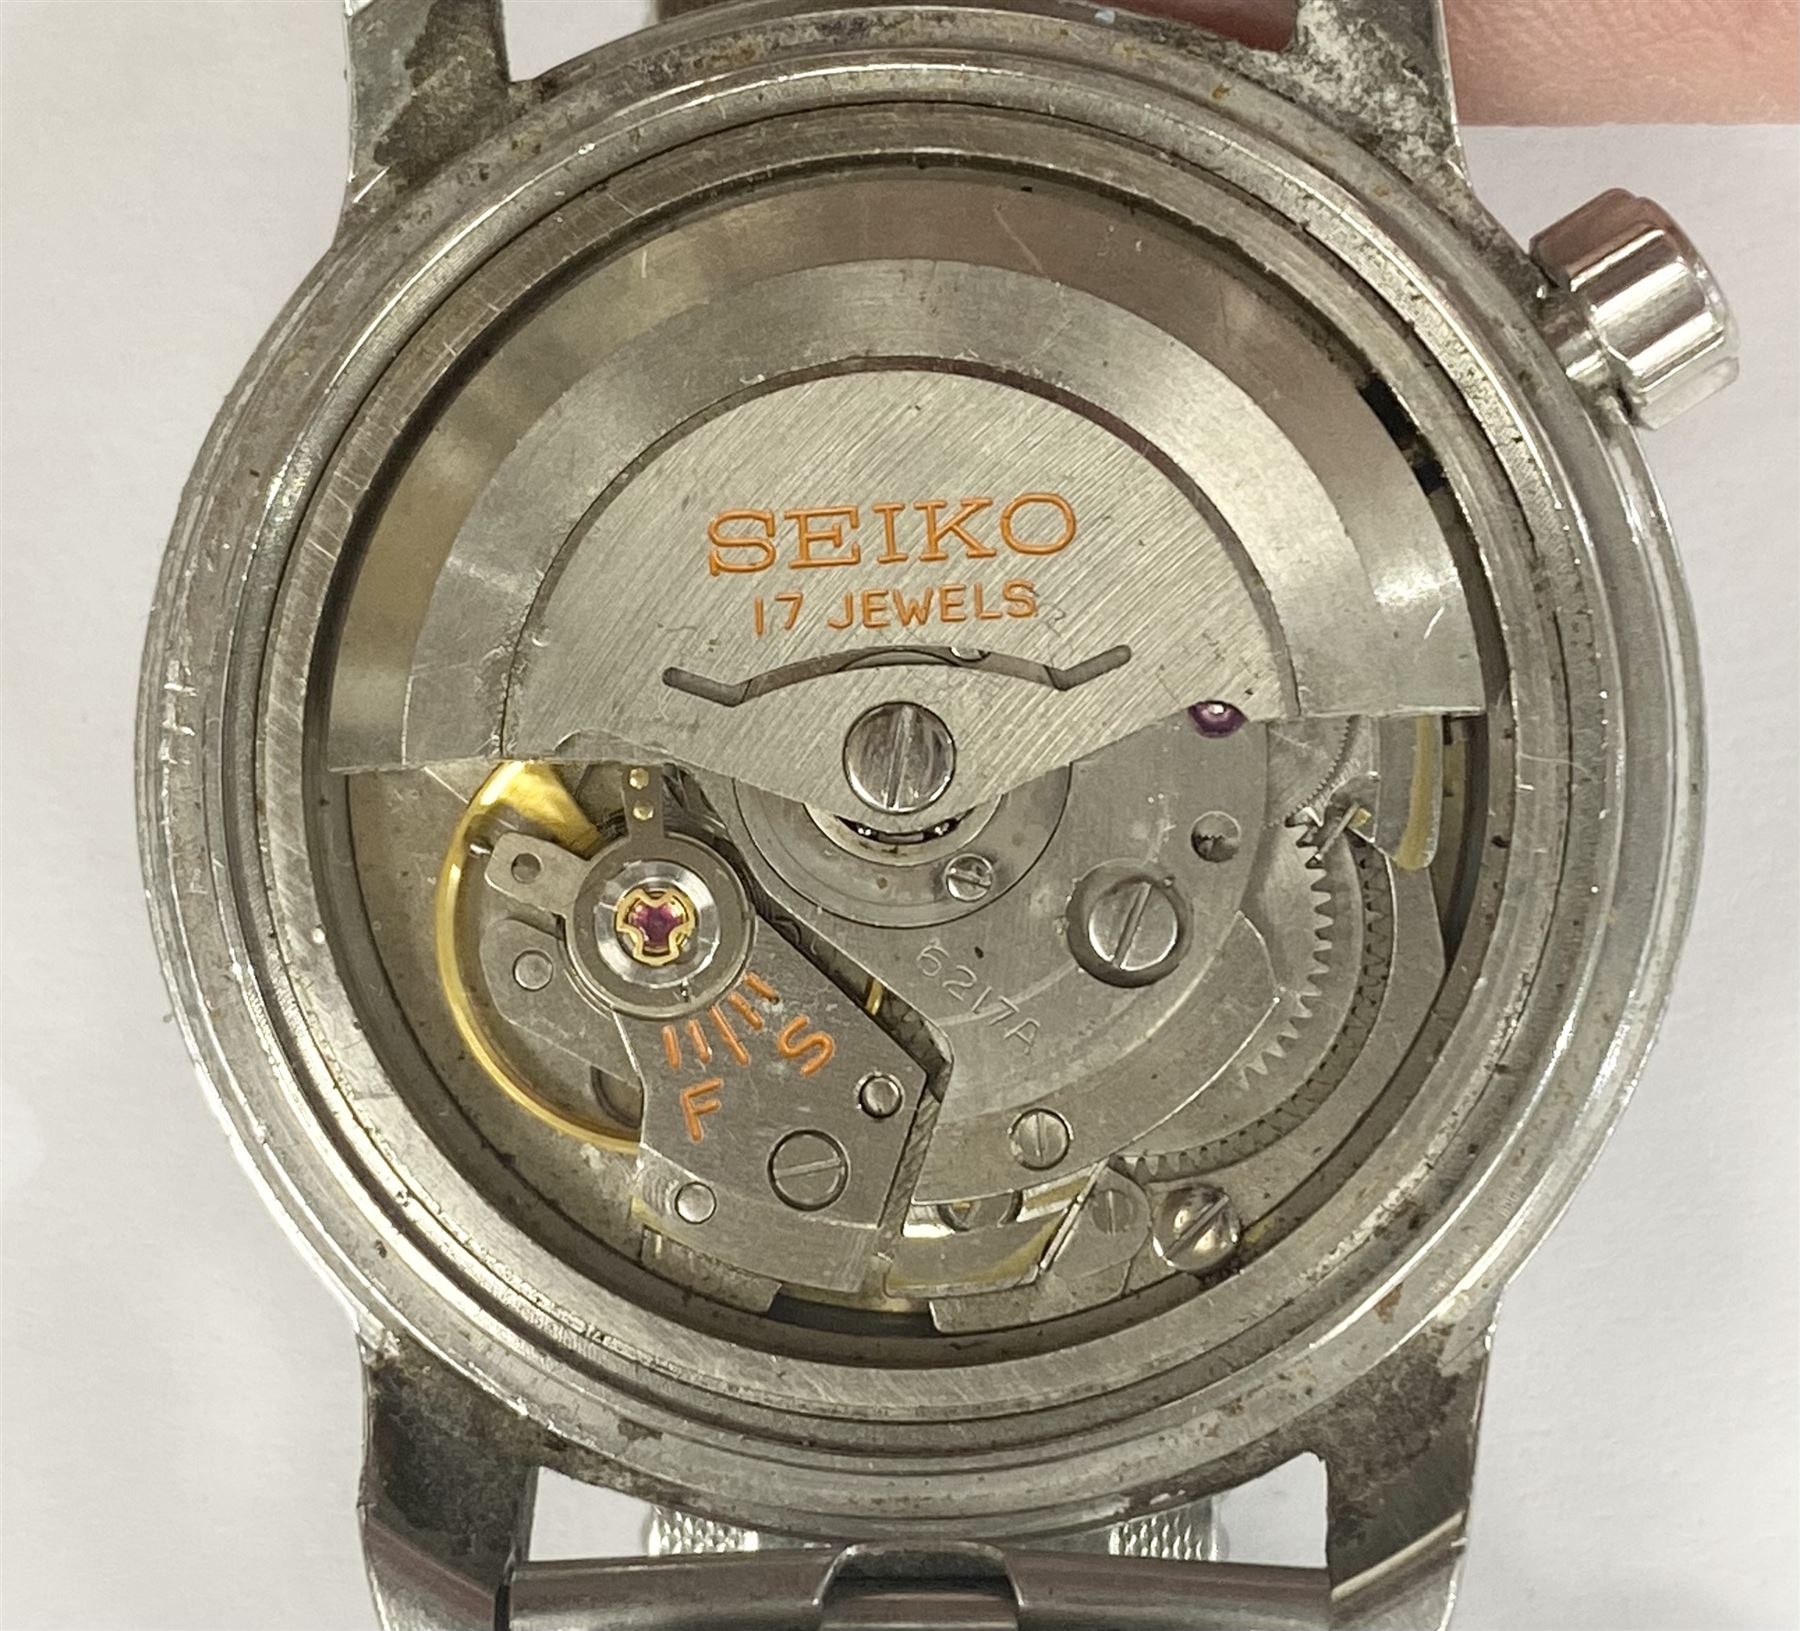 Seiko World Time Diashock 17 Jewels automatic wristwatch - Image 5 of 6